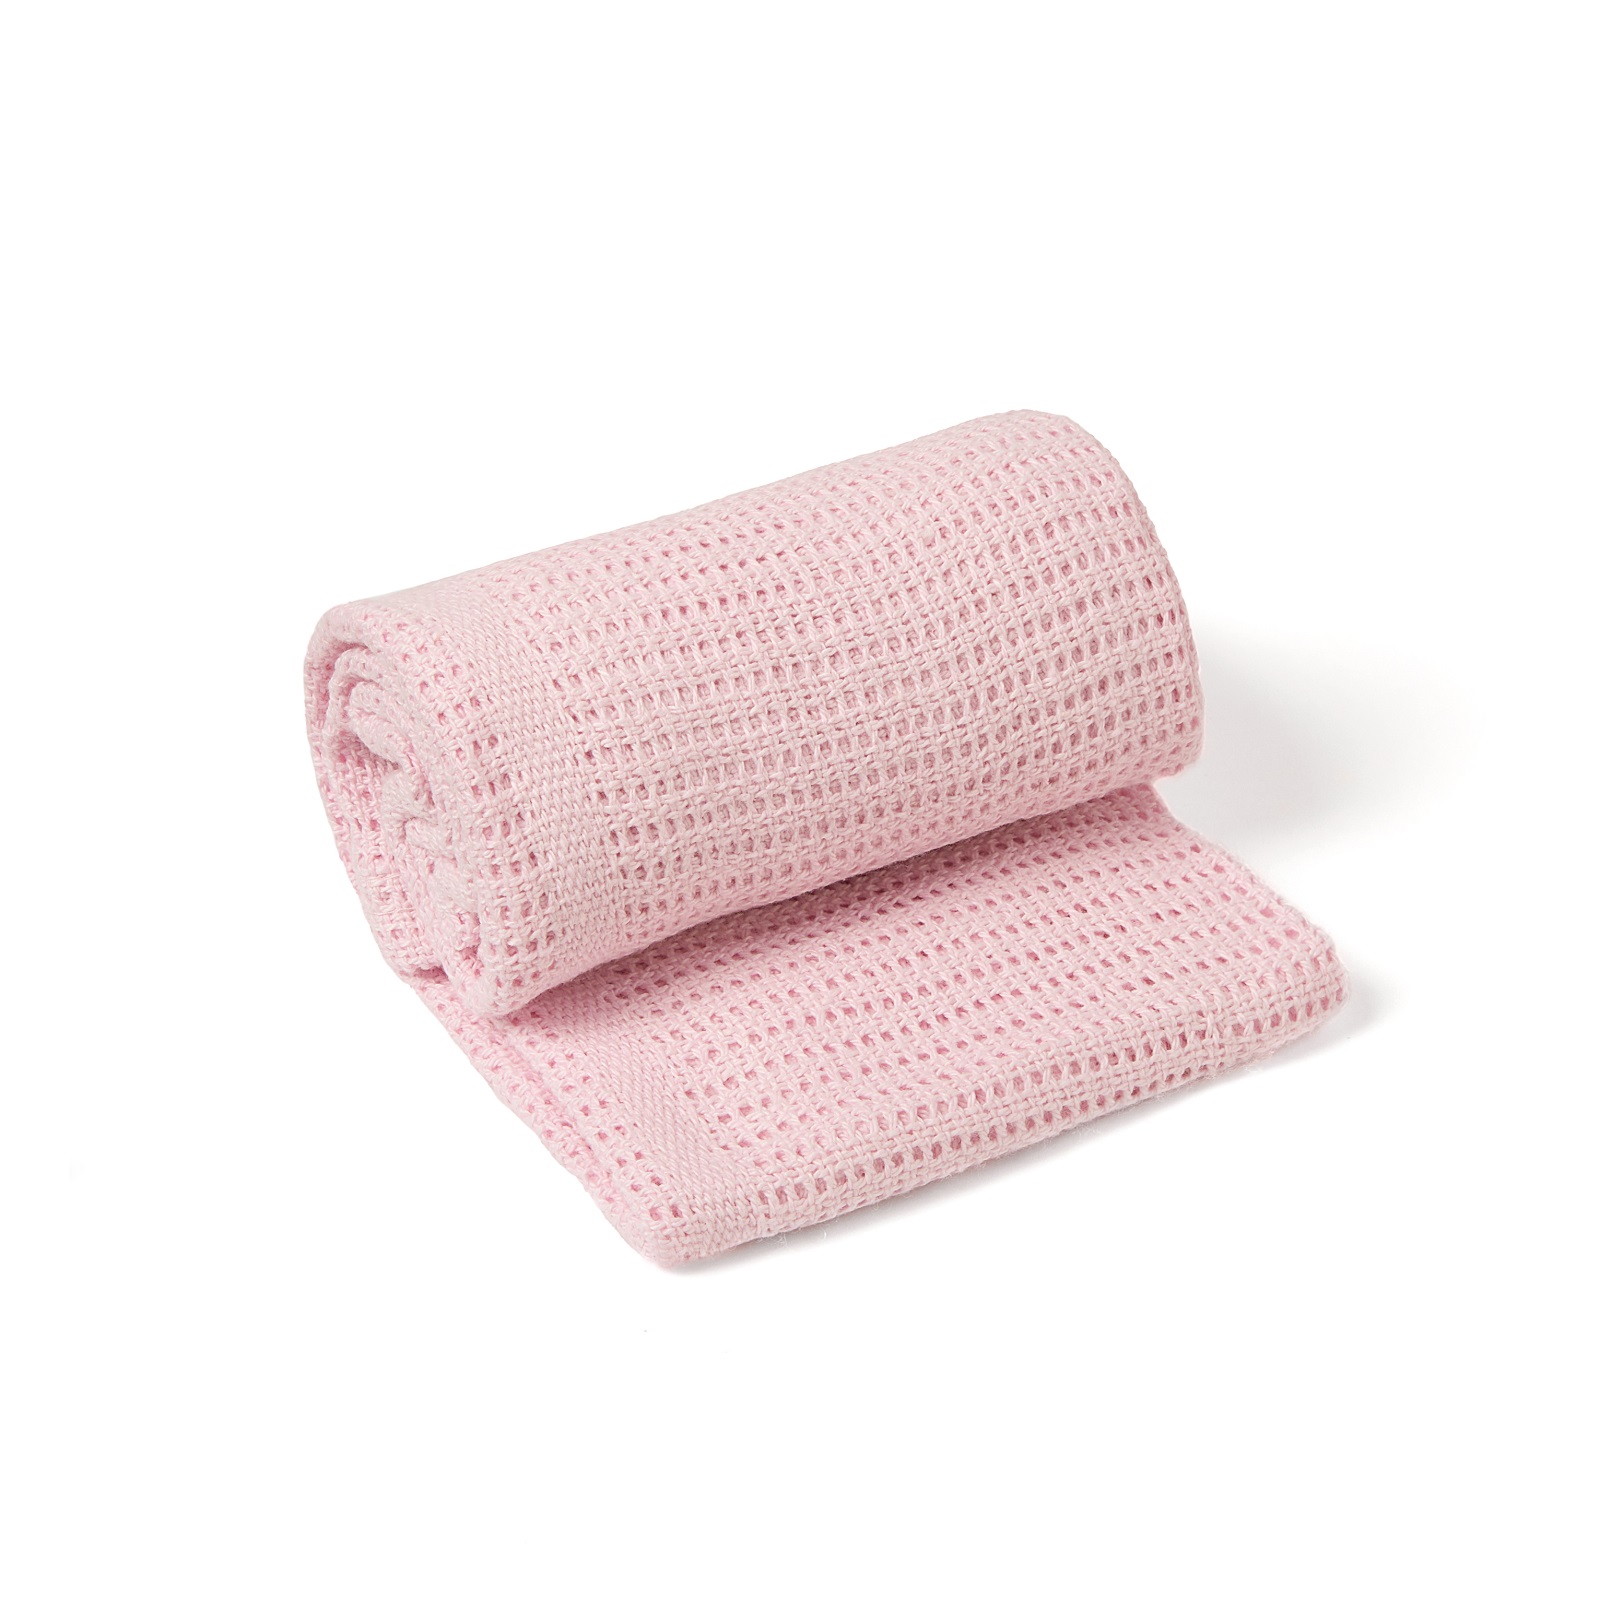 Soft Cotton Pram/Moses Basket/Crib Cellular Blanket - Pink